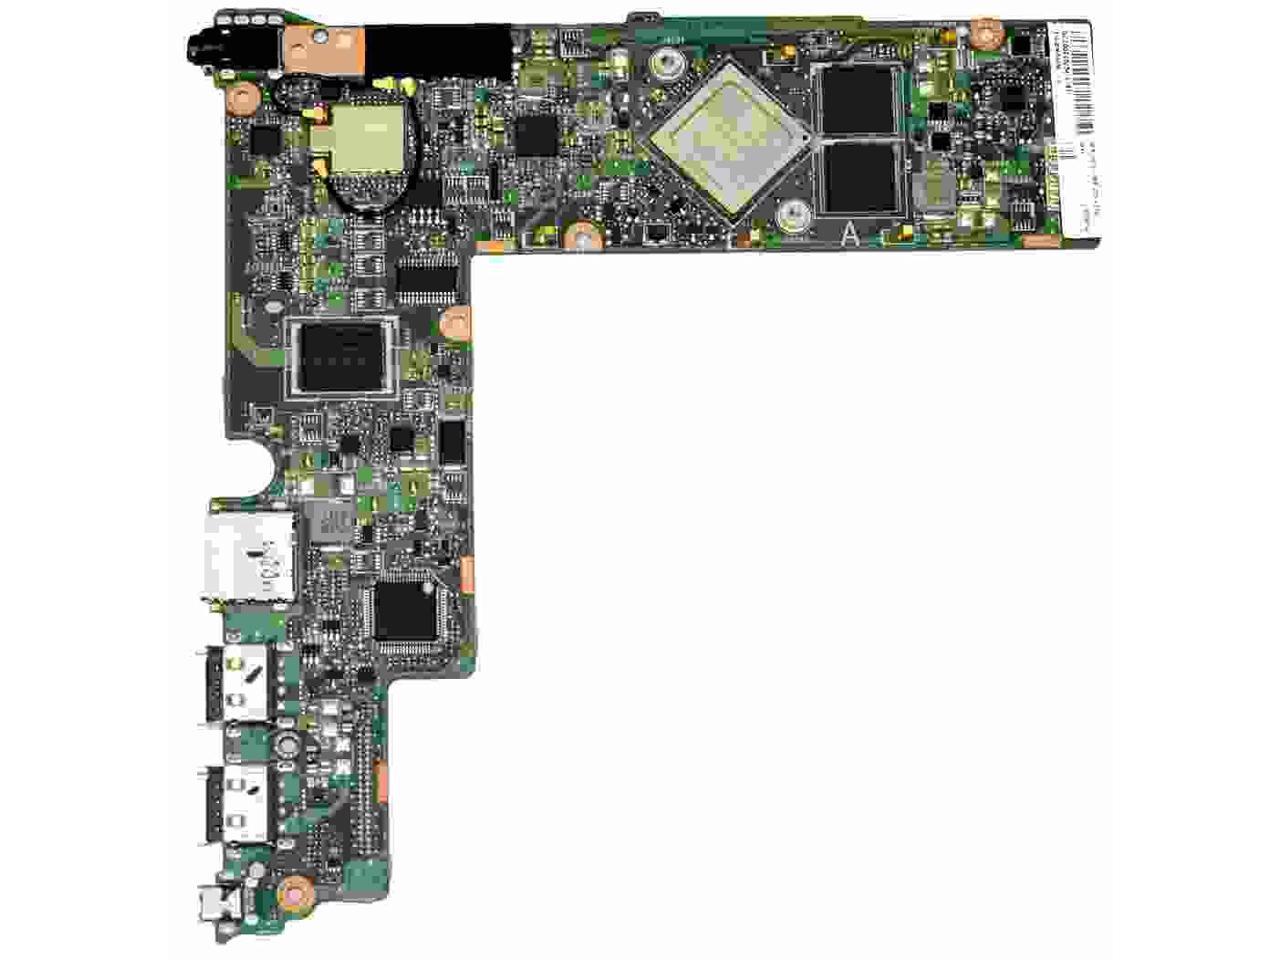 60NL0970-MB1220 Asus Flip C100PA Chromebook Motherbaord 4GB/16GB SSD w/ Rockchip RK3288C 1.8GHz CPU